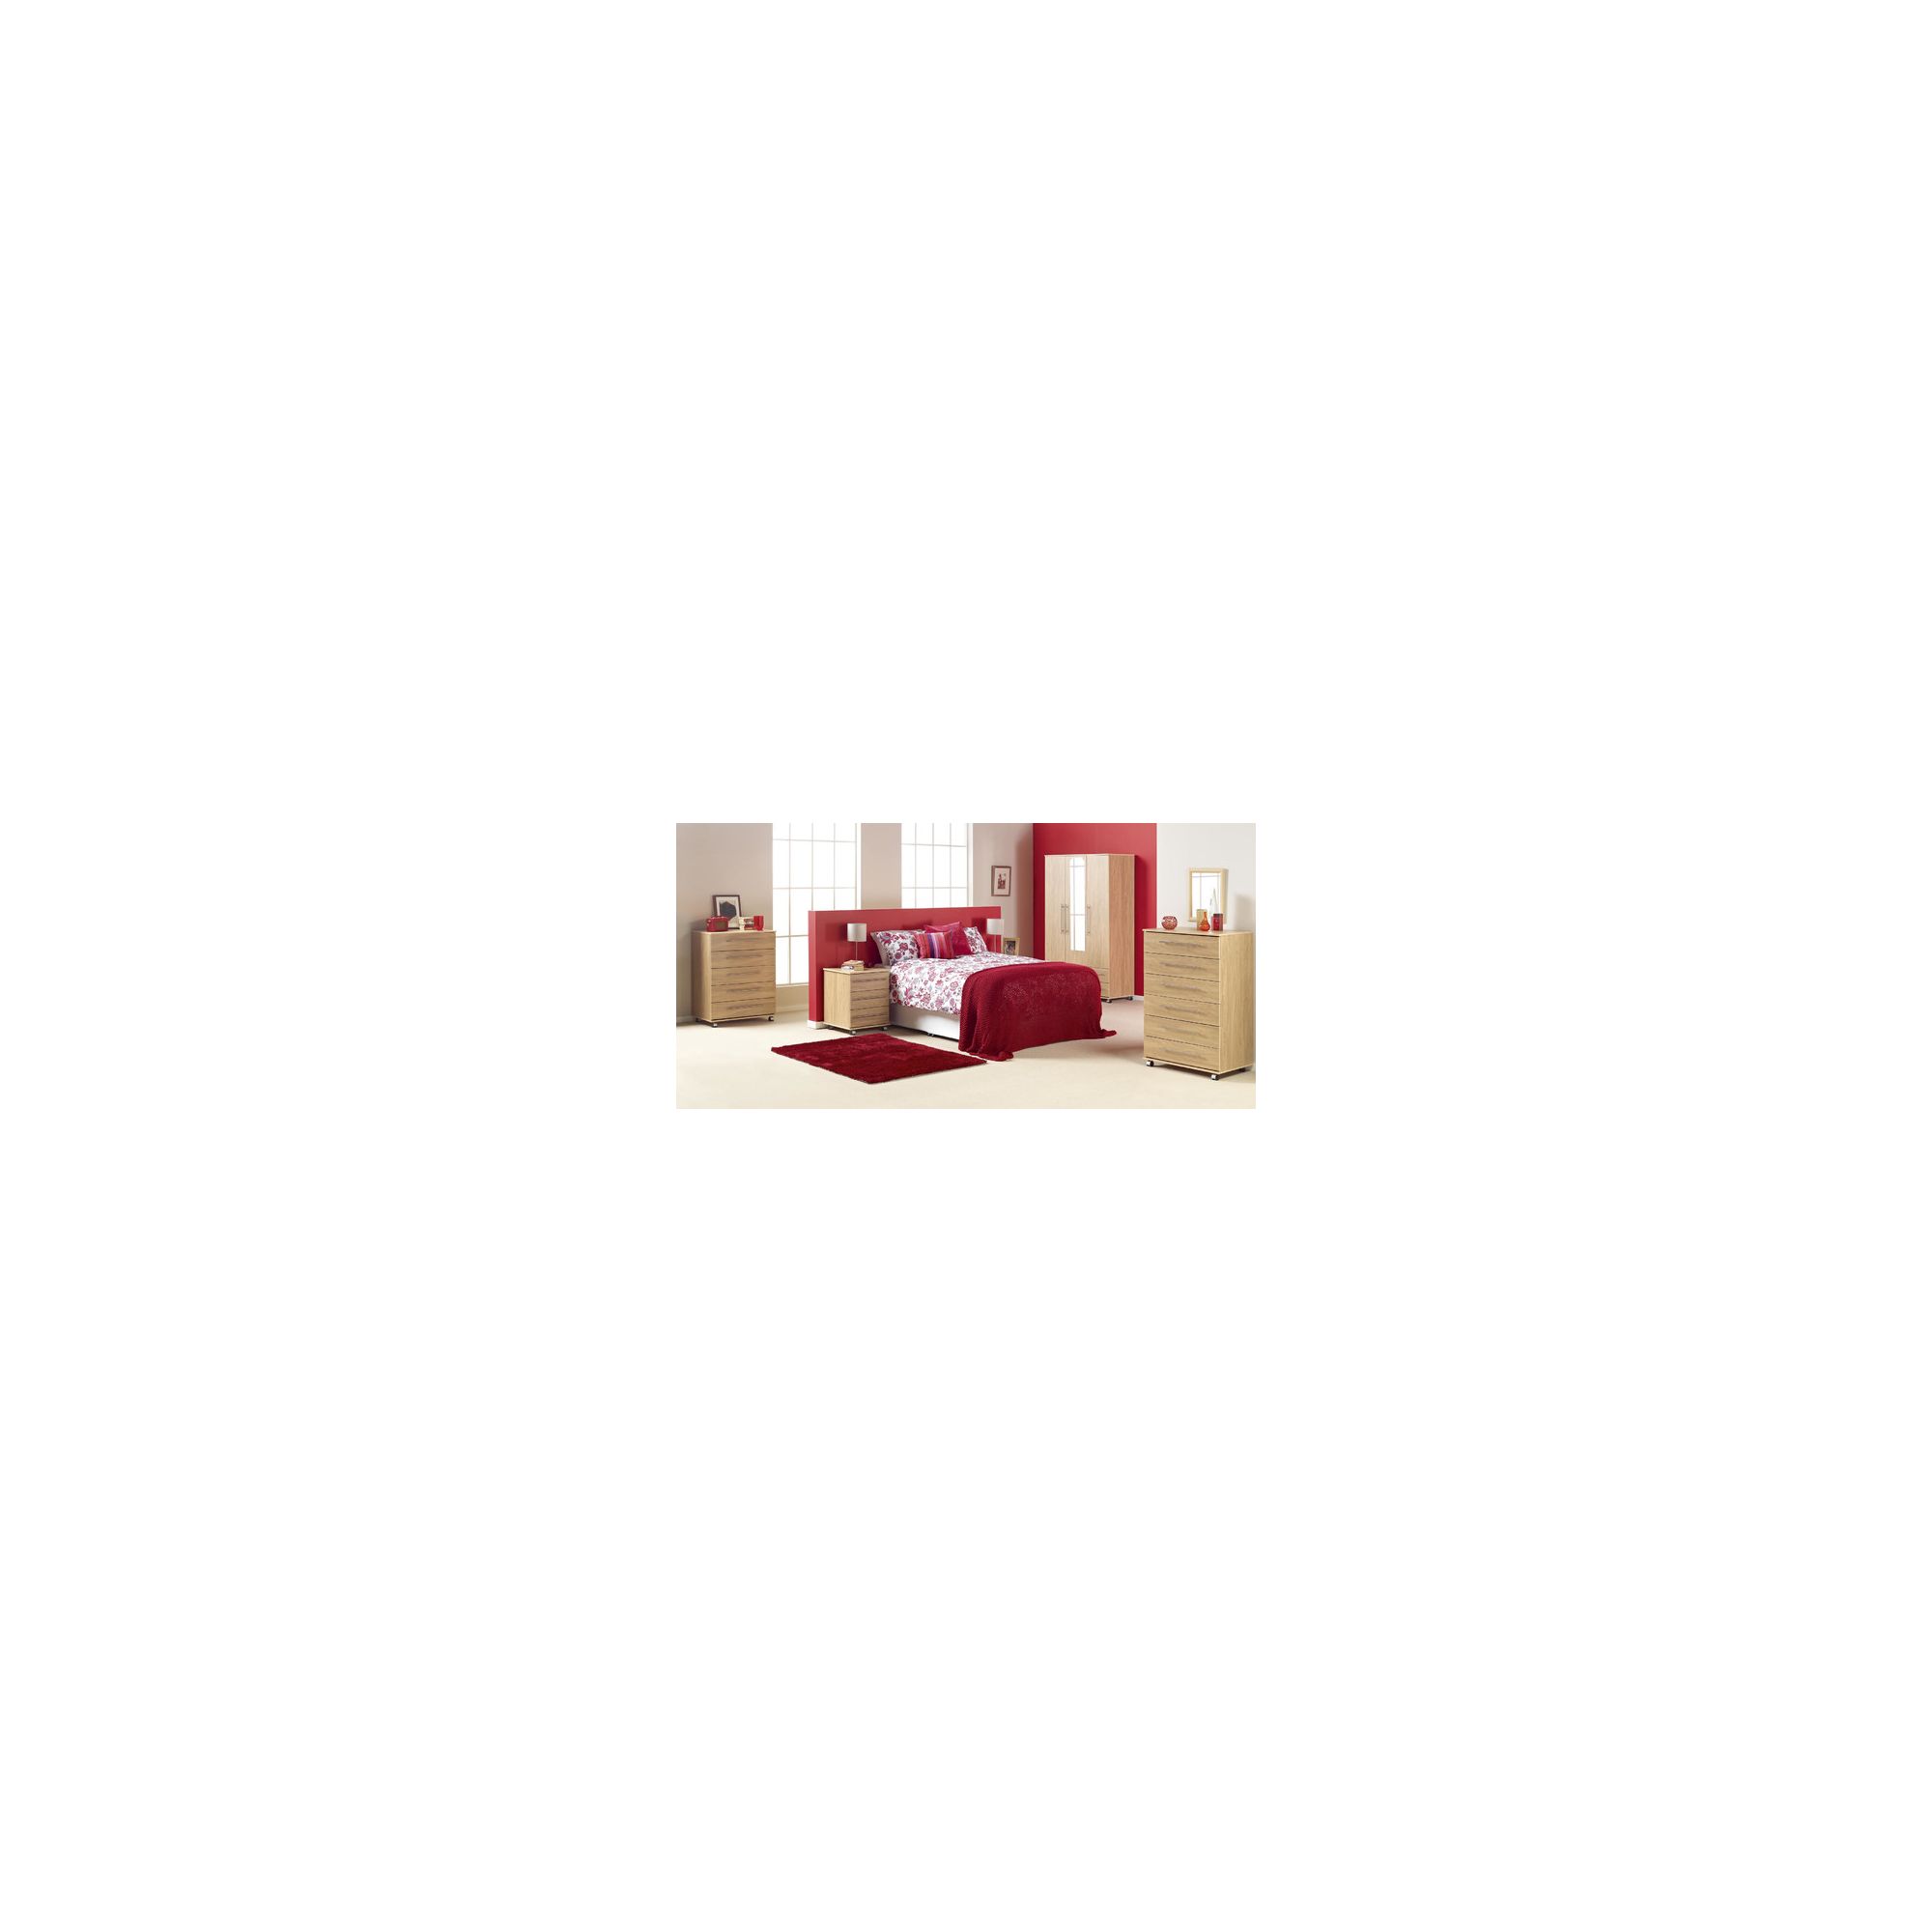 Ideal Furniture Bobby 4 Door Wardrobe - White at Tesco Direct